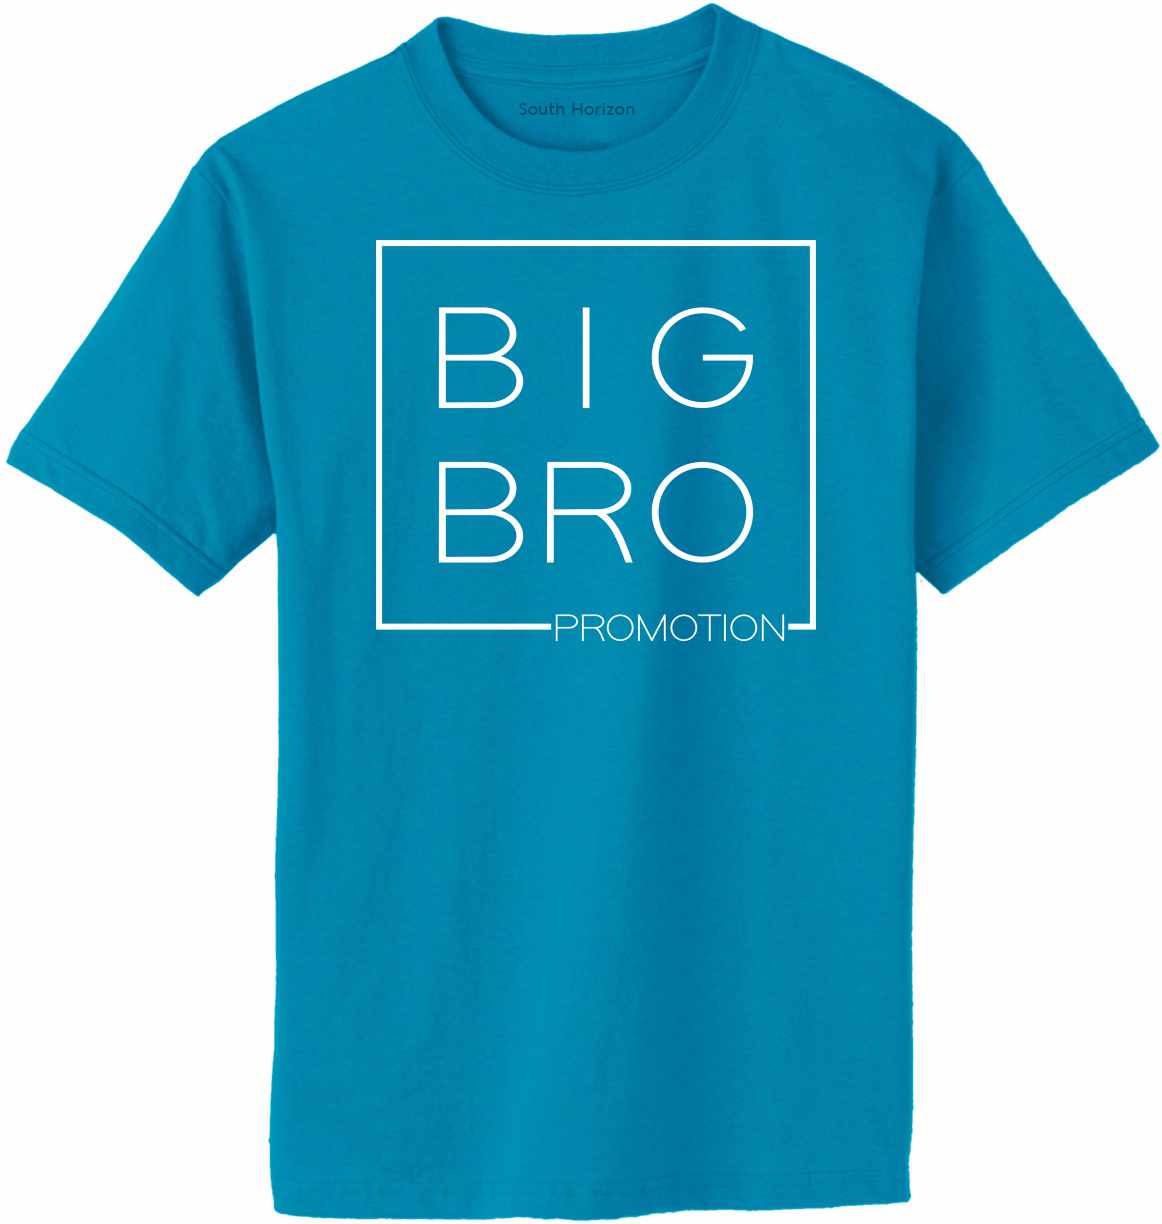 Big Bro Promotion - Big Brother - Box on Adult T-Shirt